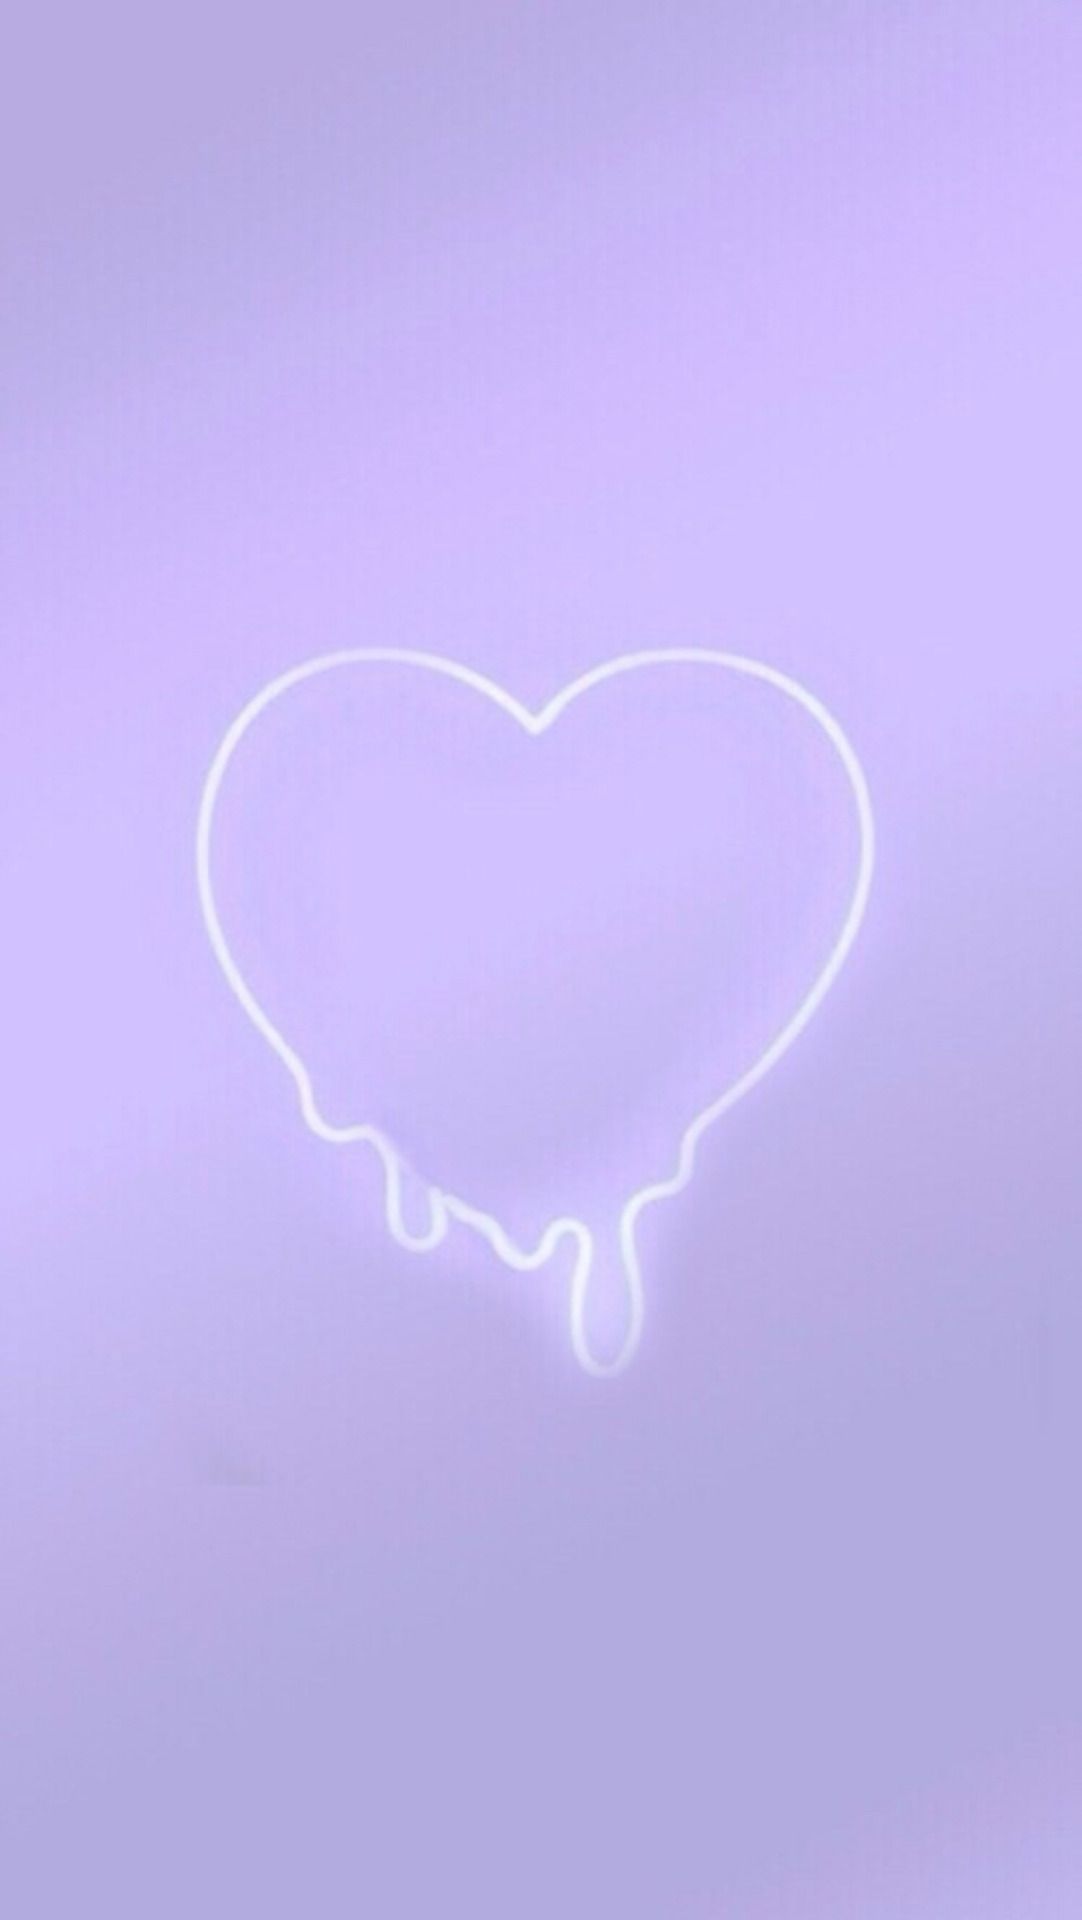 IPhone wallpaper of a neon heart on a purple background - Pastel purple, light purple